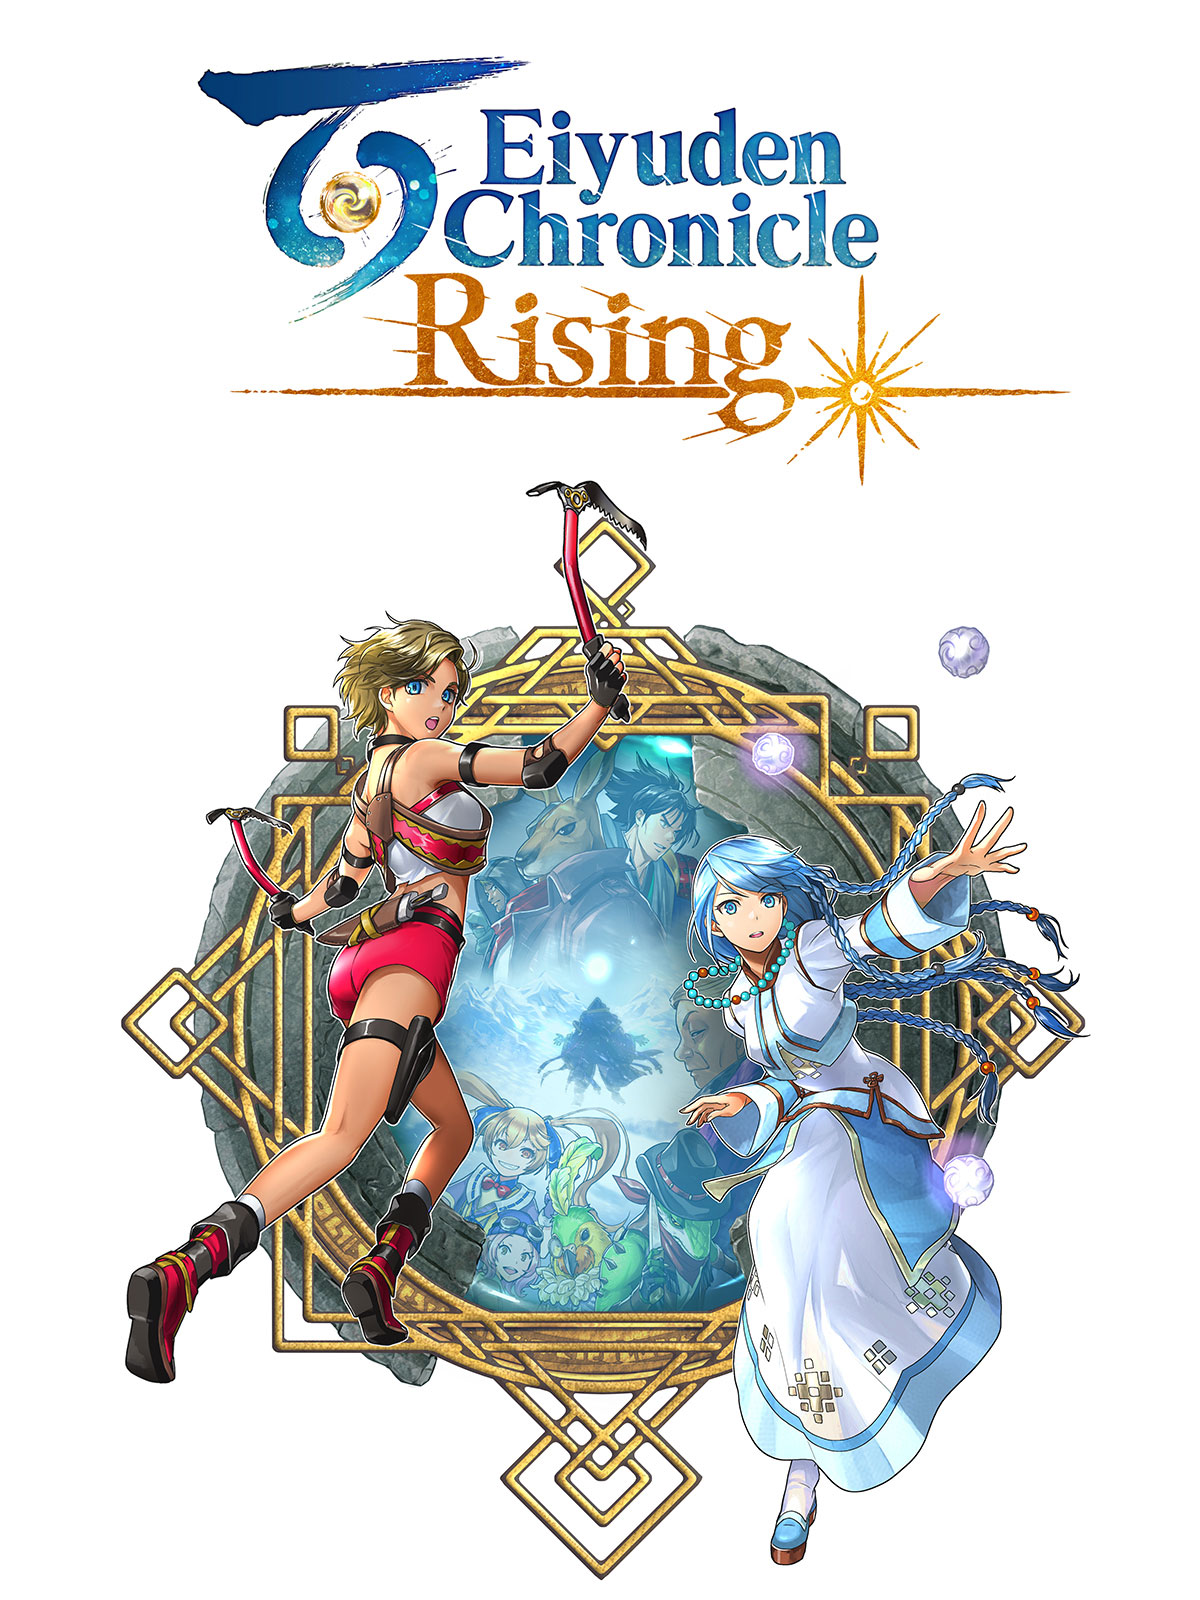 Eiyuden Chronicle: Rising [PC, Цифровая версия] (Цифровая версия) eiyuden chronicle rising [pc цифровая версия] цифровая версия